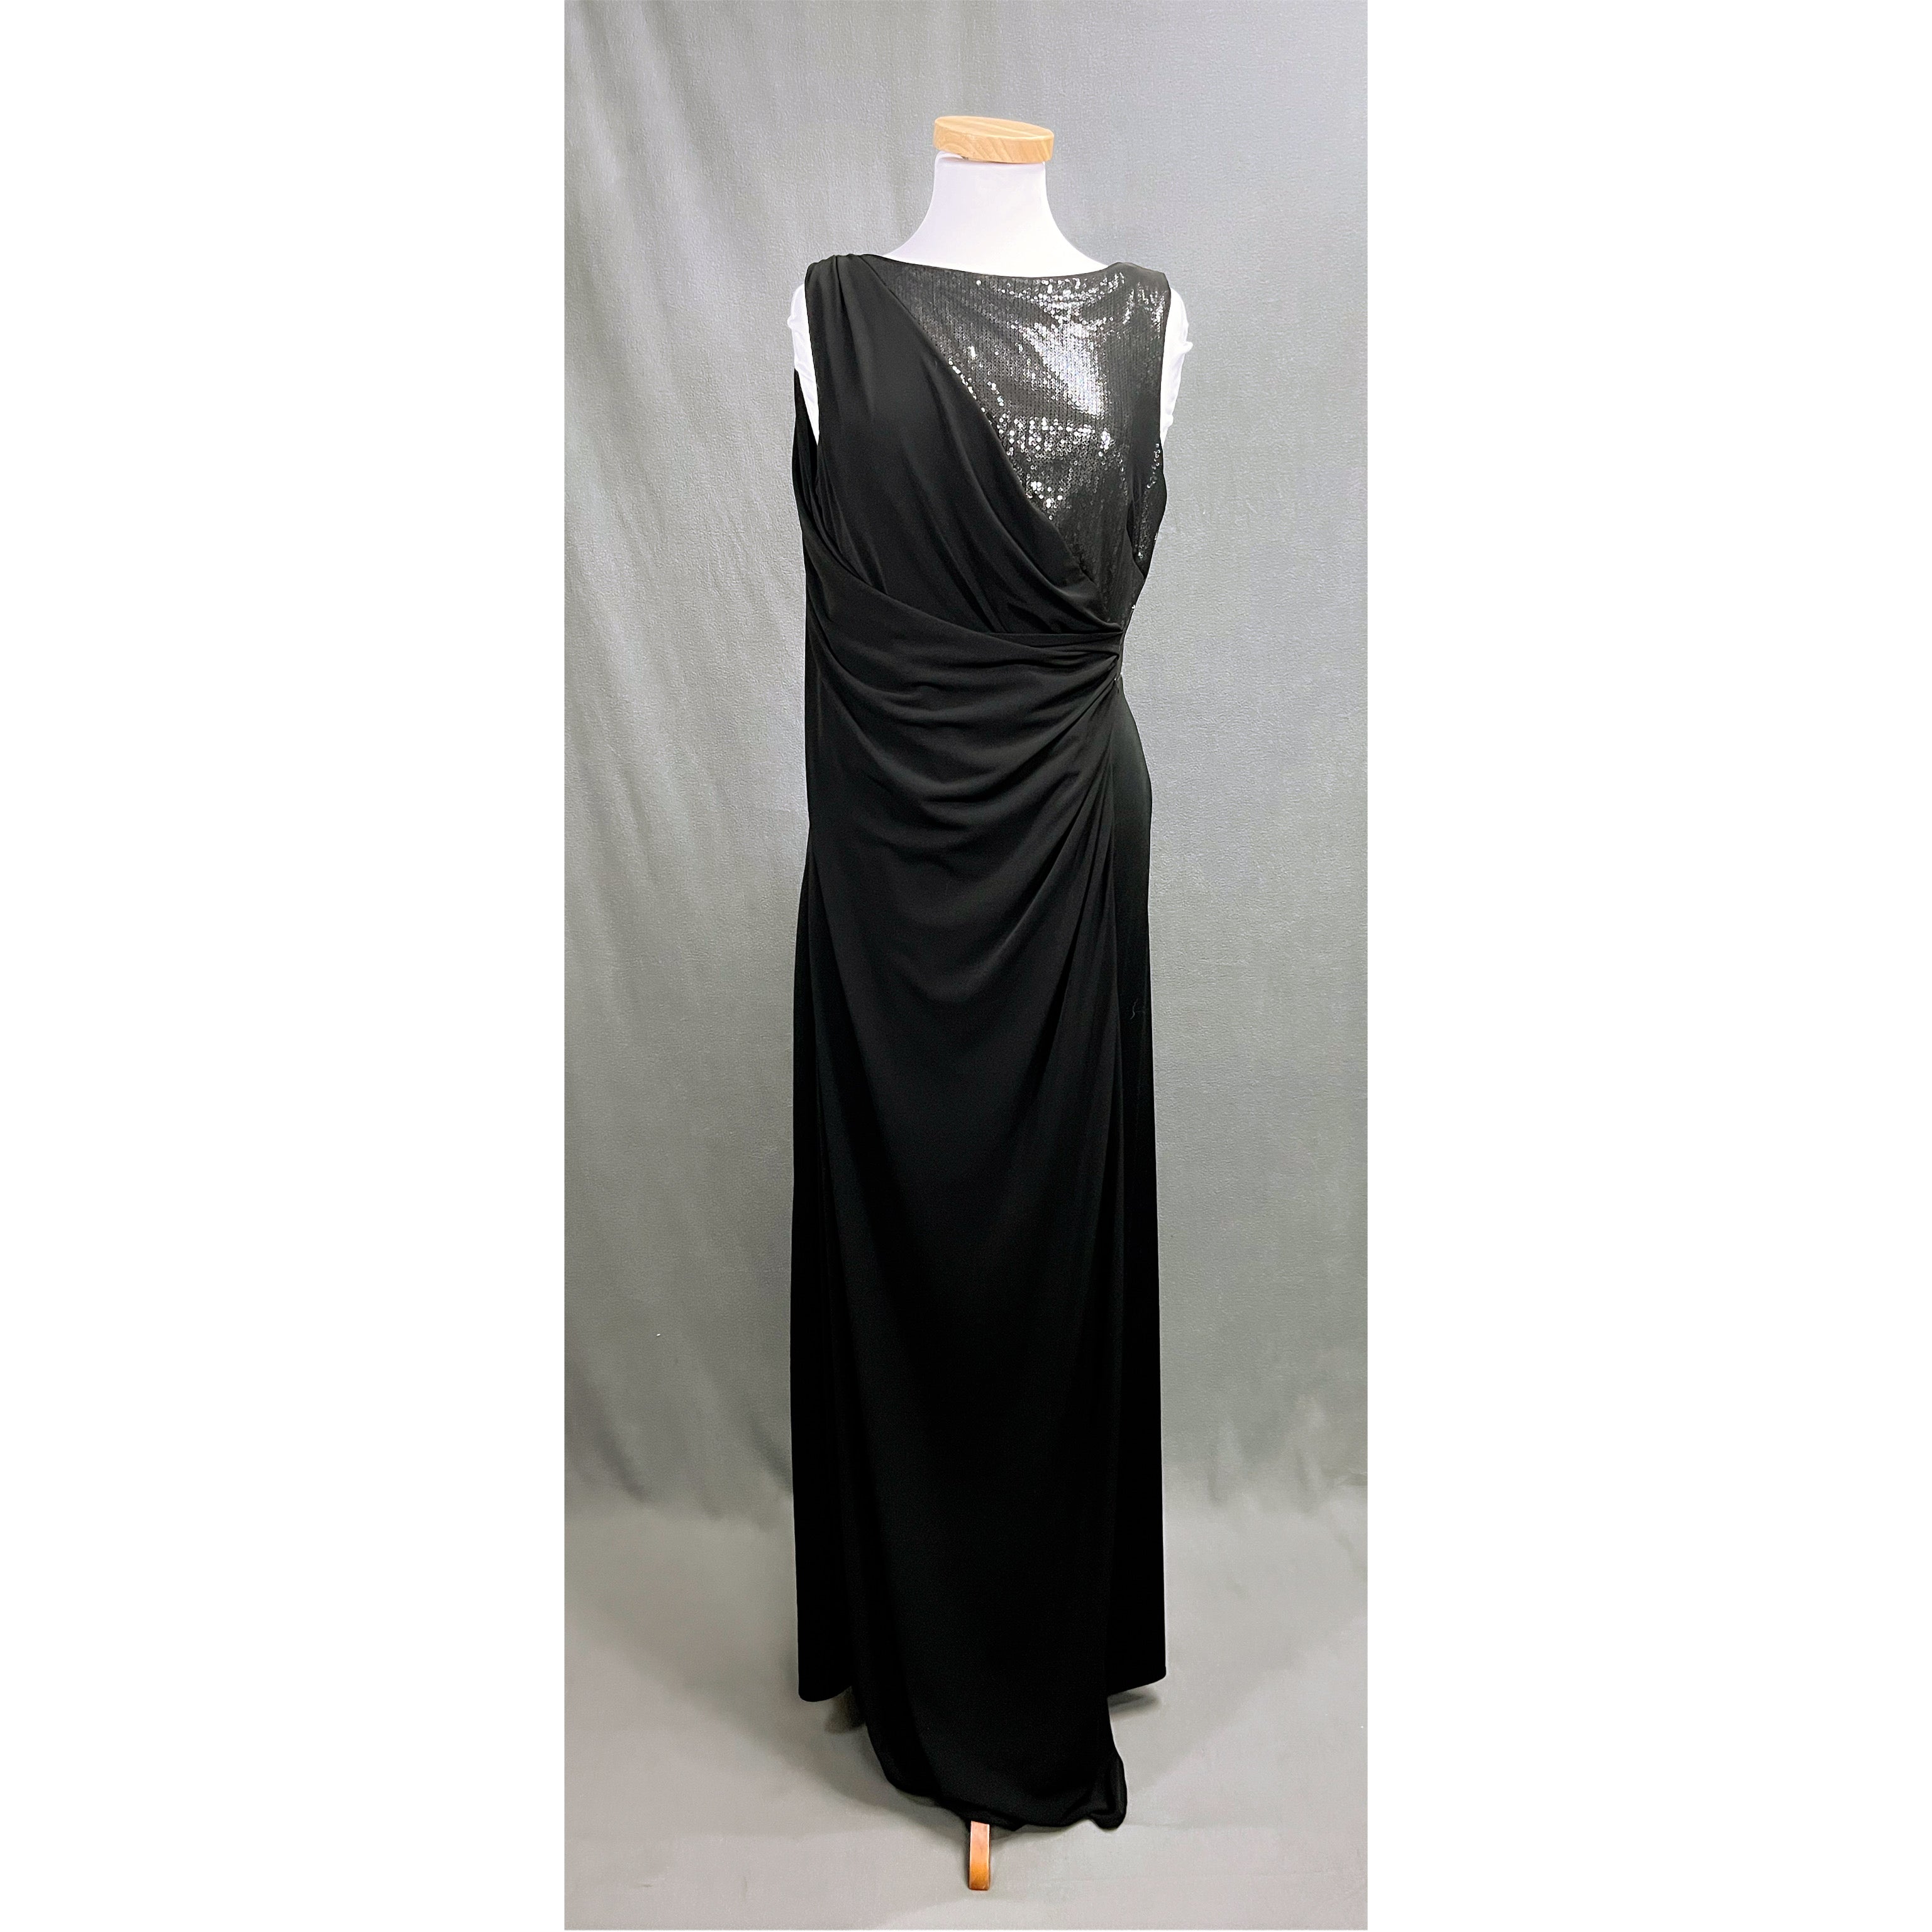 Frank Lyman black dress, size 12, NEW WITH TAGS!